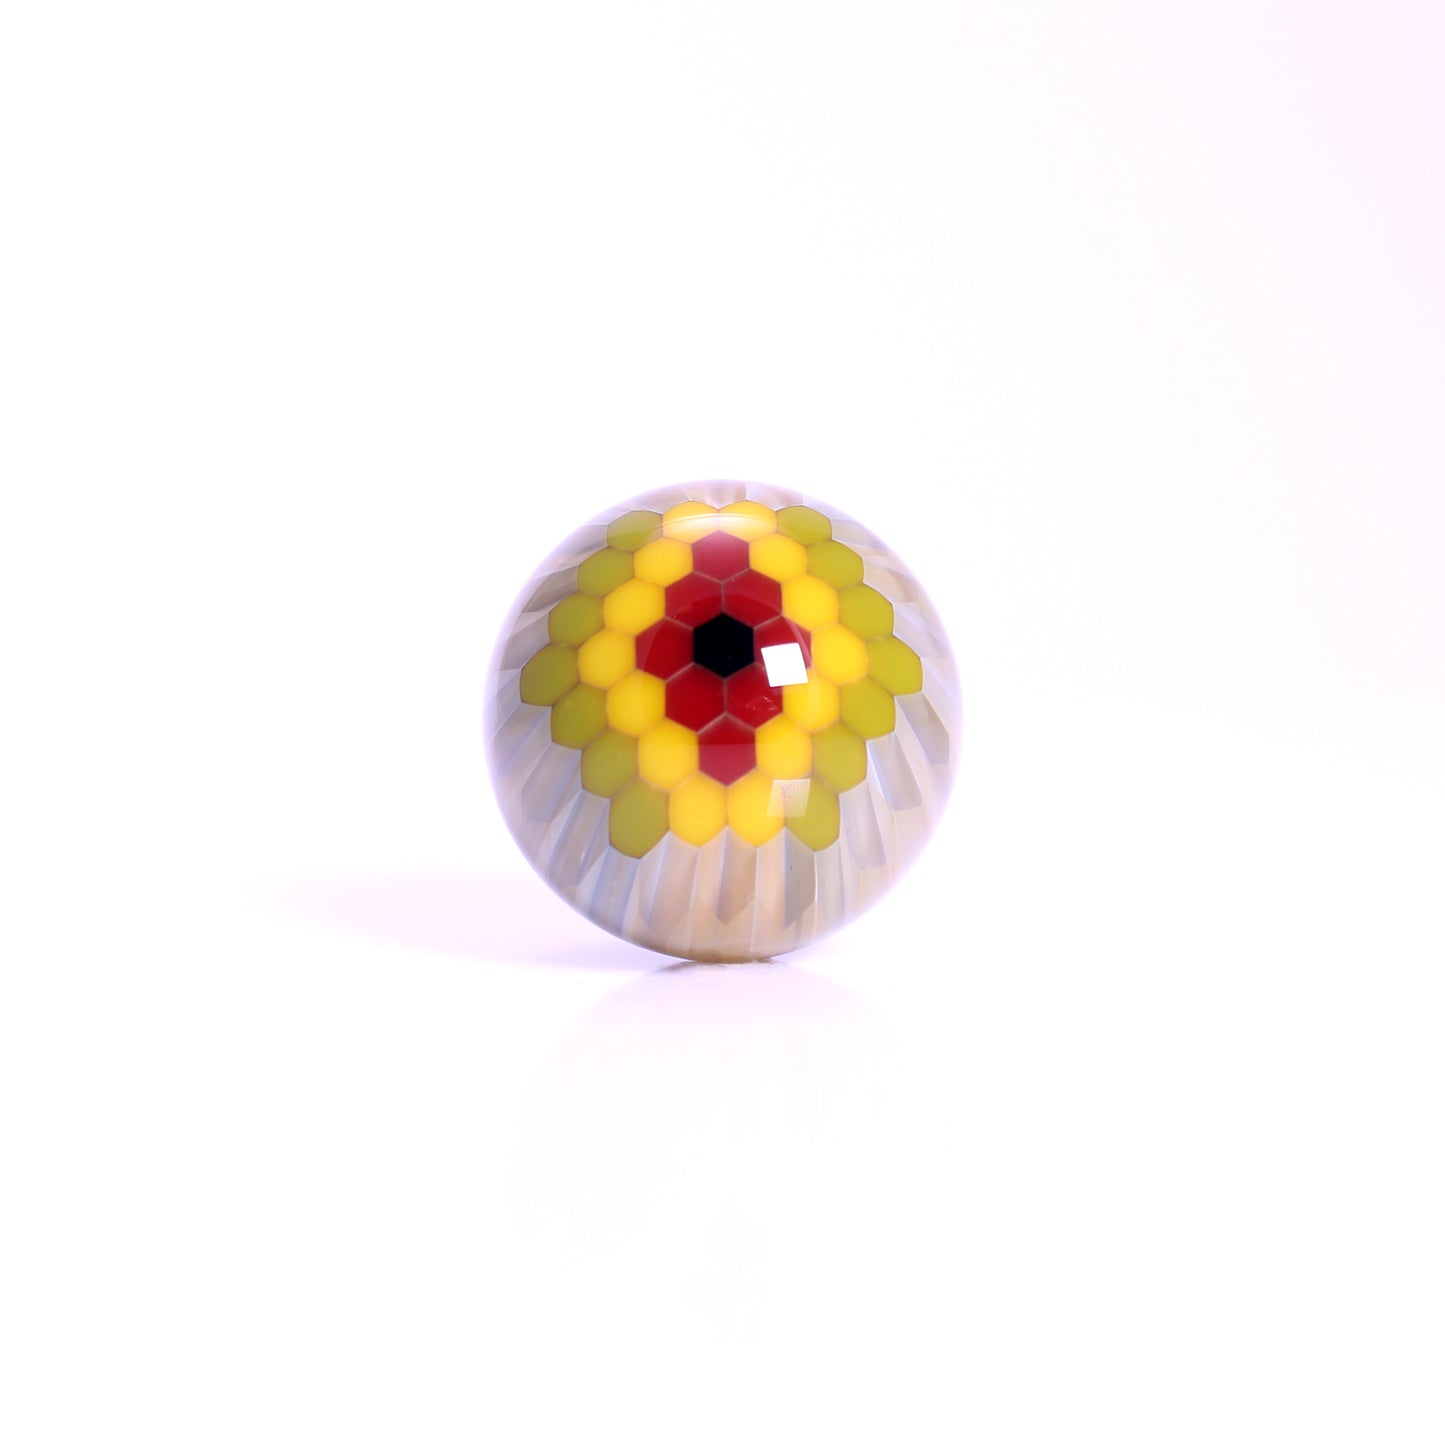 "Dragon's Eye" 20mm Sphere